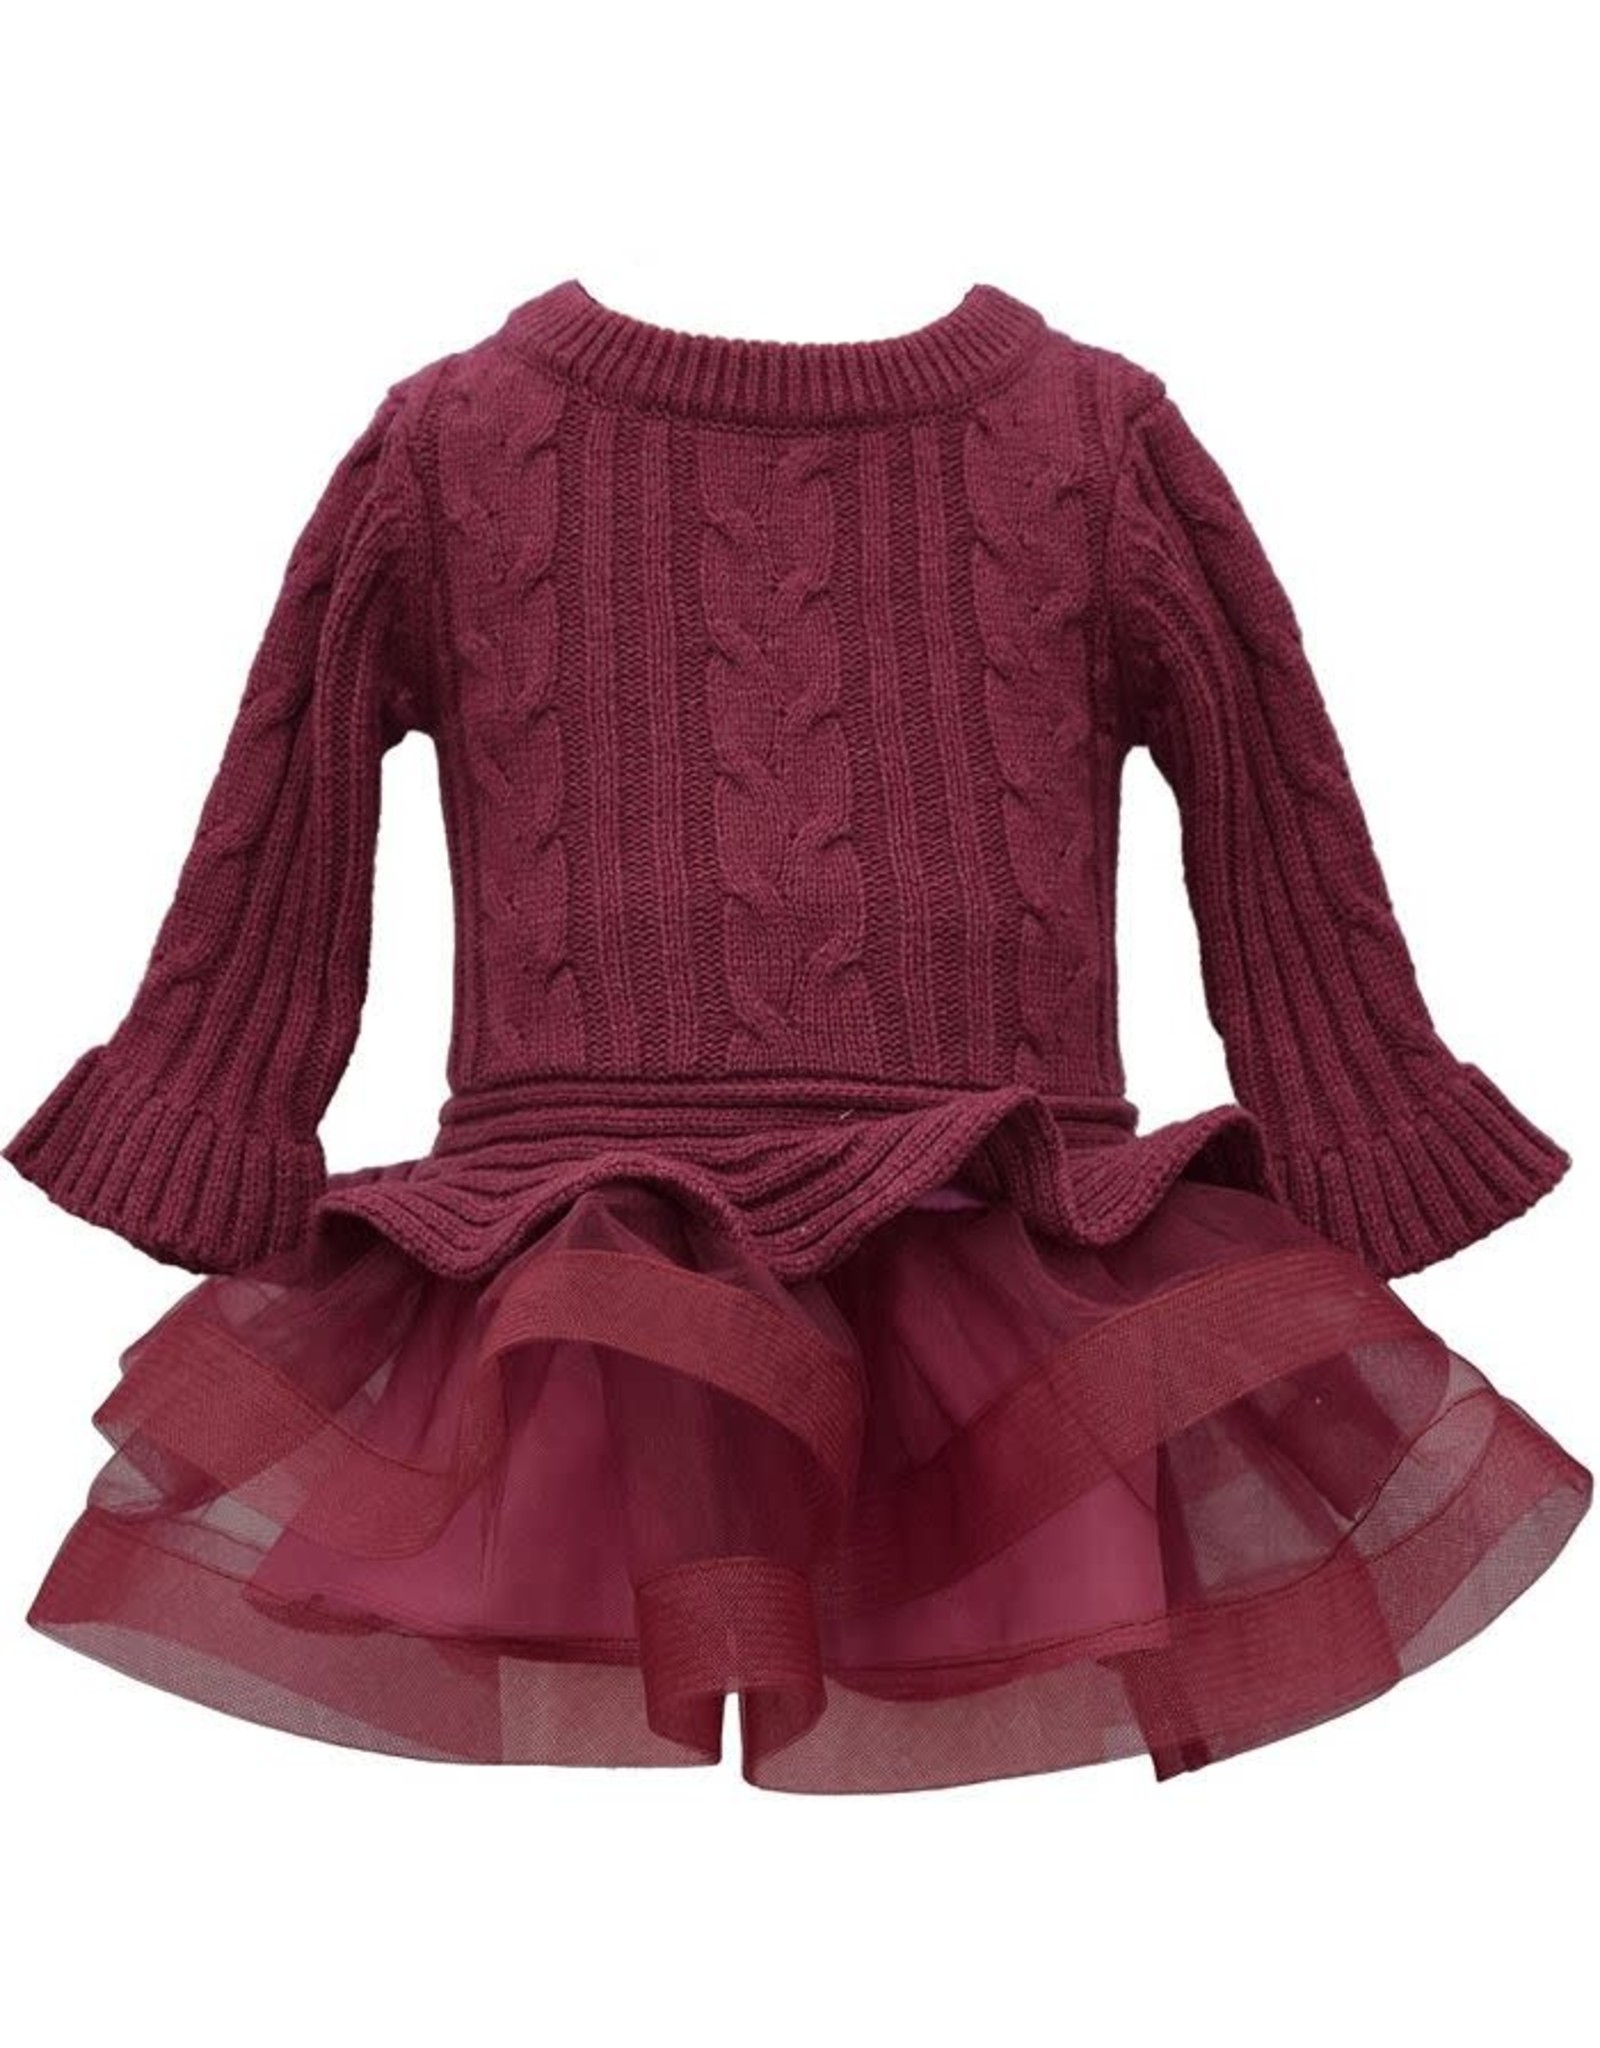 Bonnie  Jean Bonnie Jean- Burgundy Cable Knit Skirt Sweater Dress